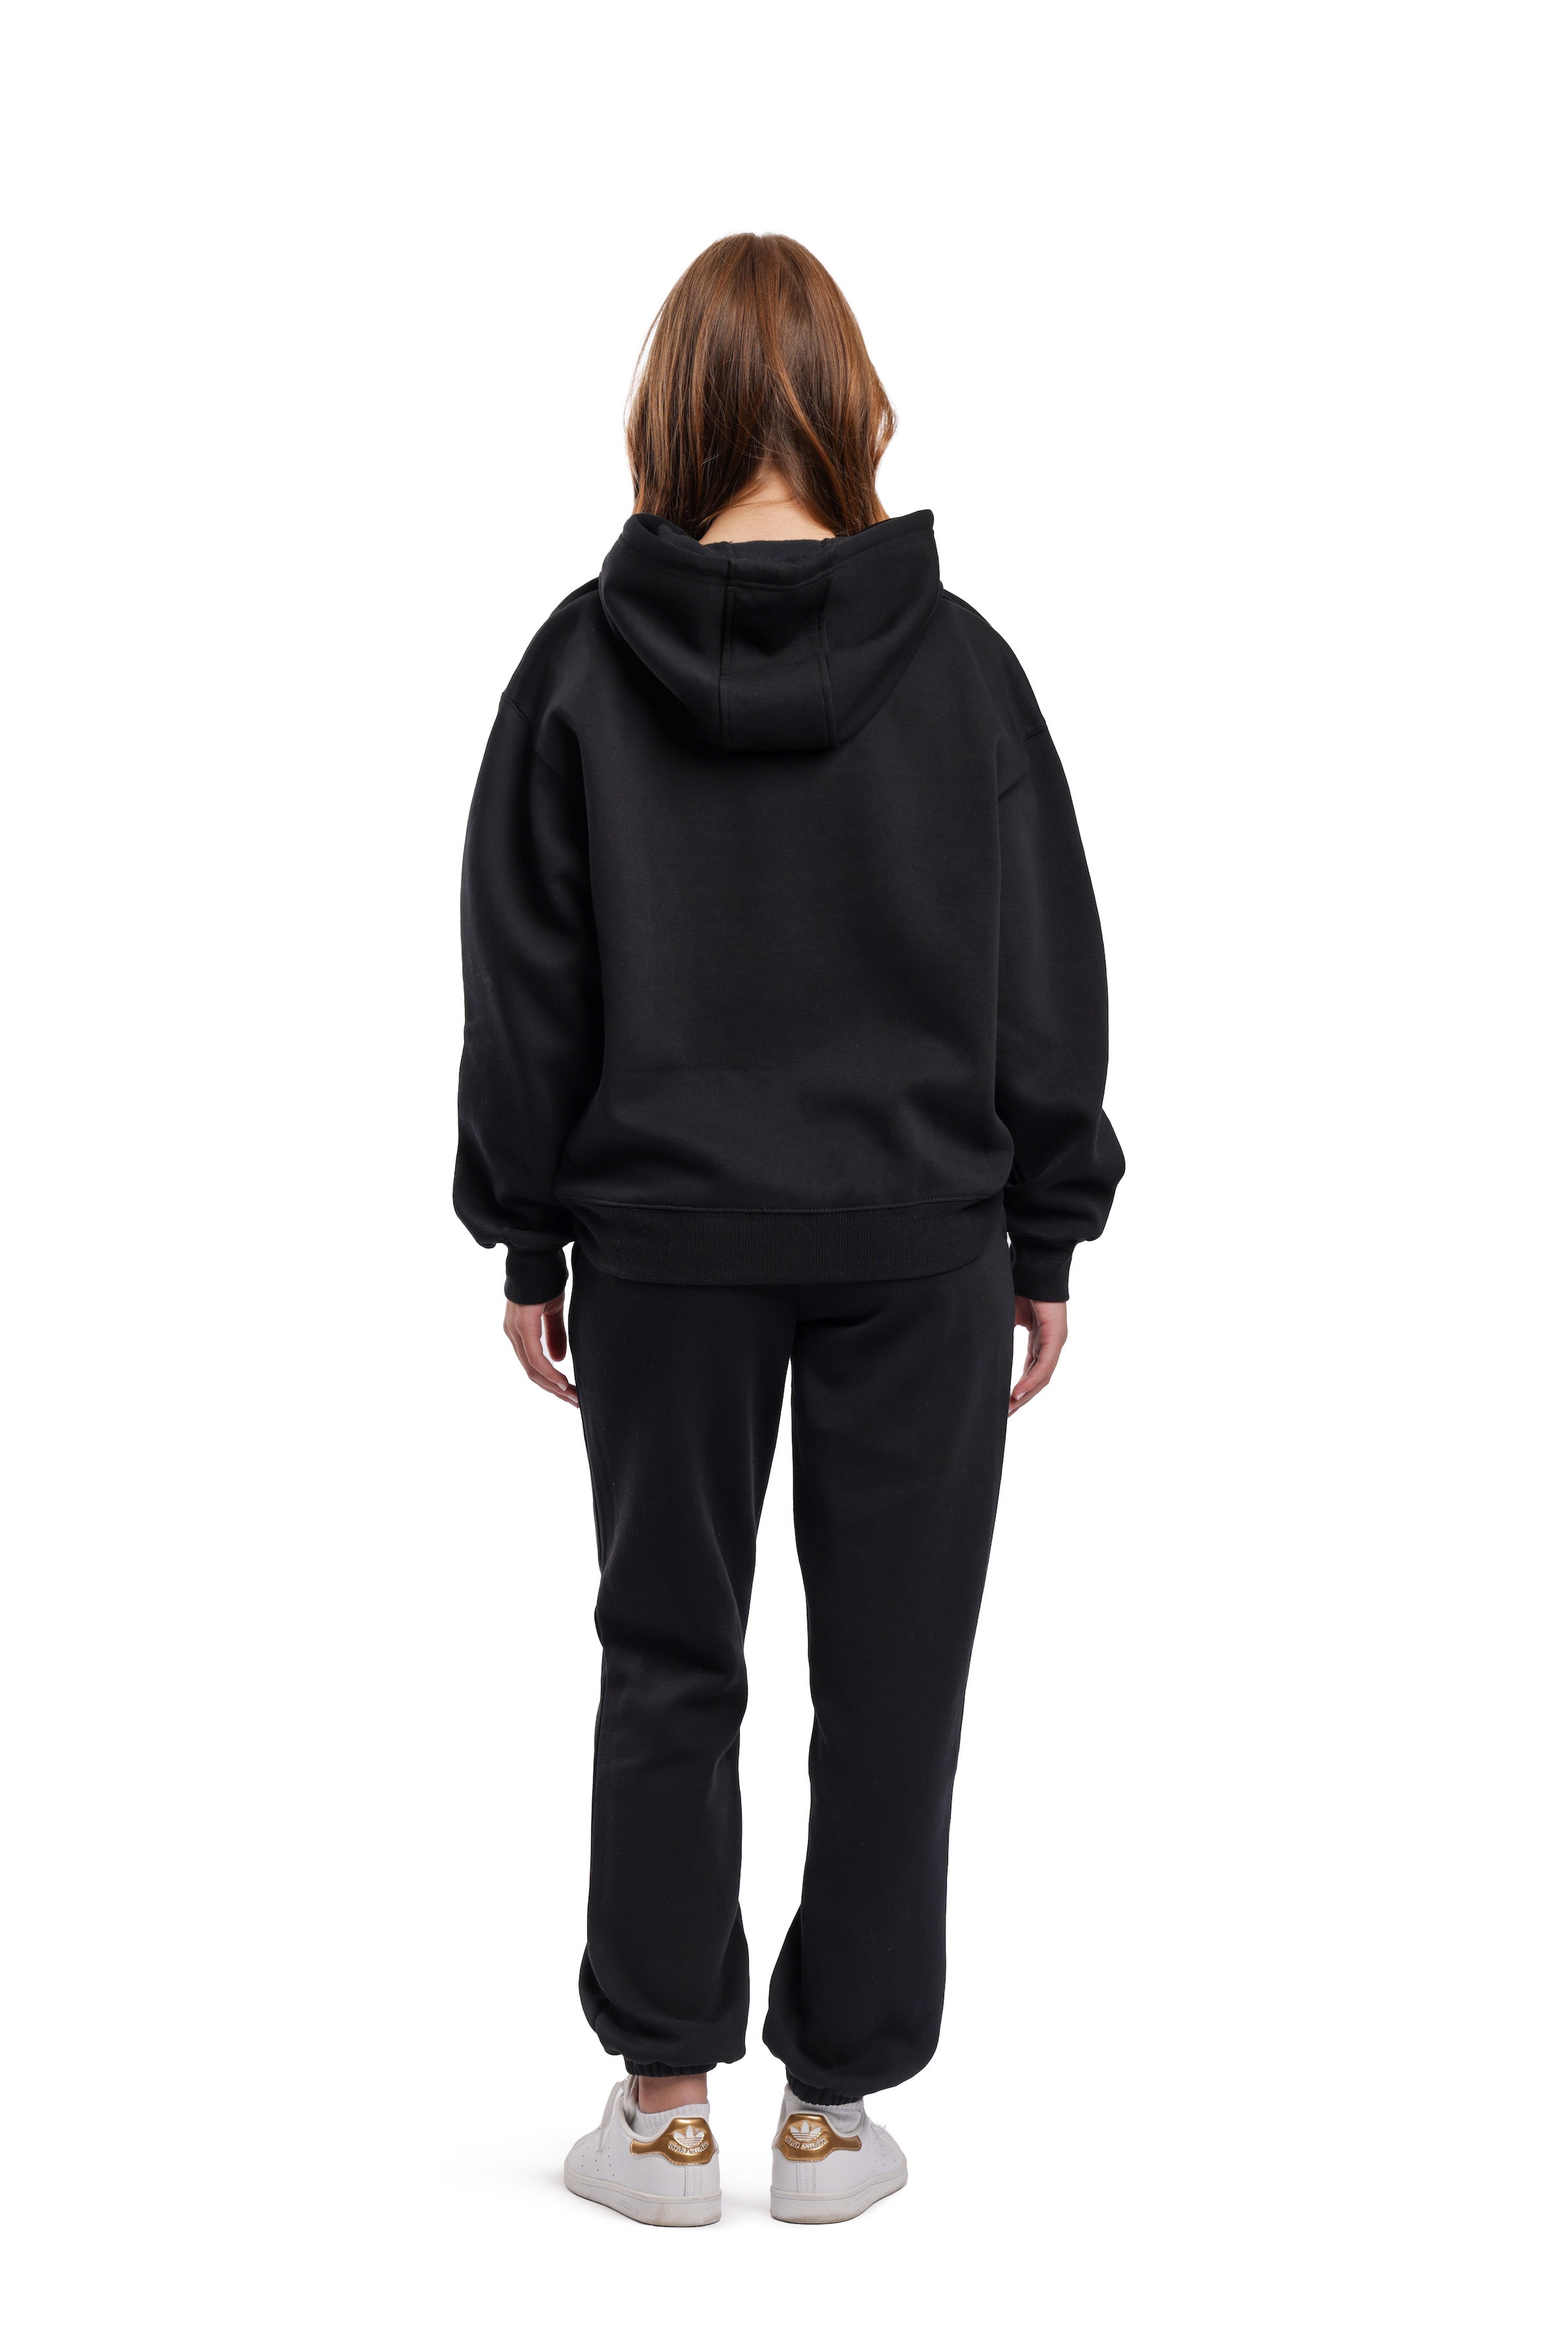 Buy Black Sweatsuit Sets for Men and Women